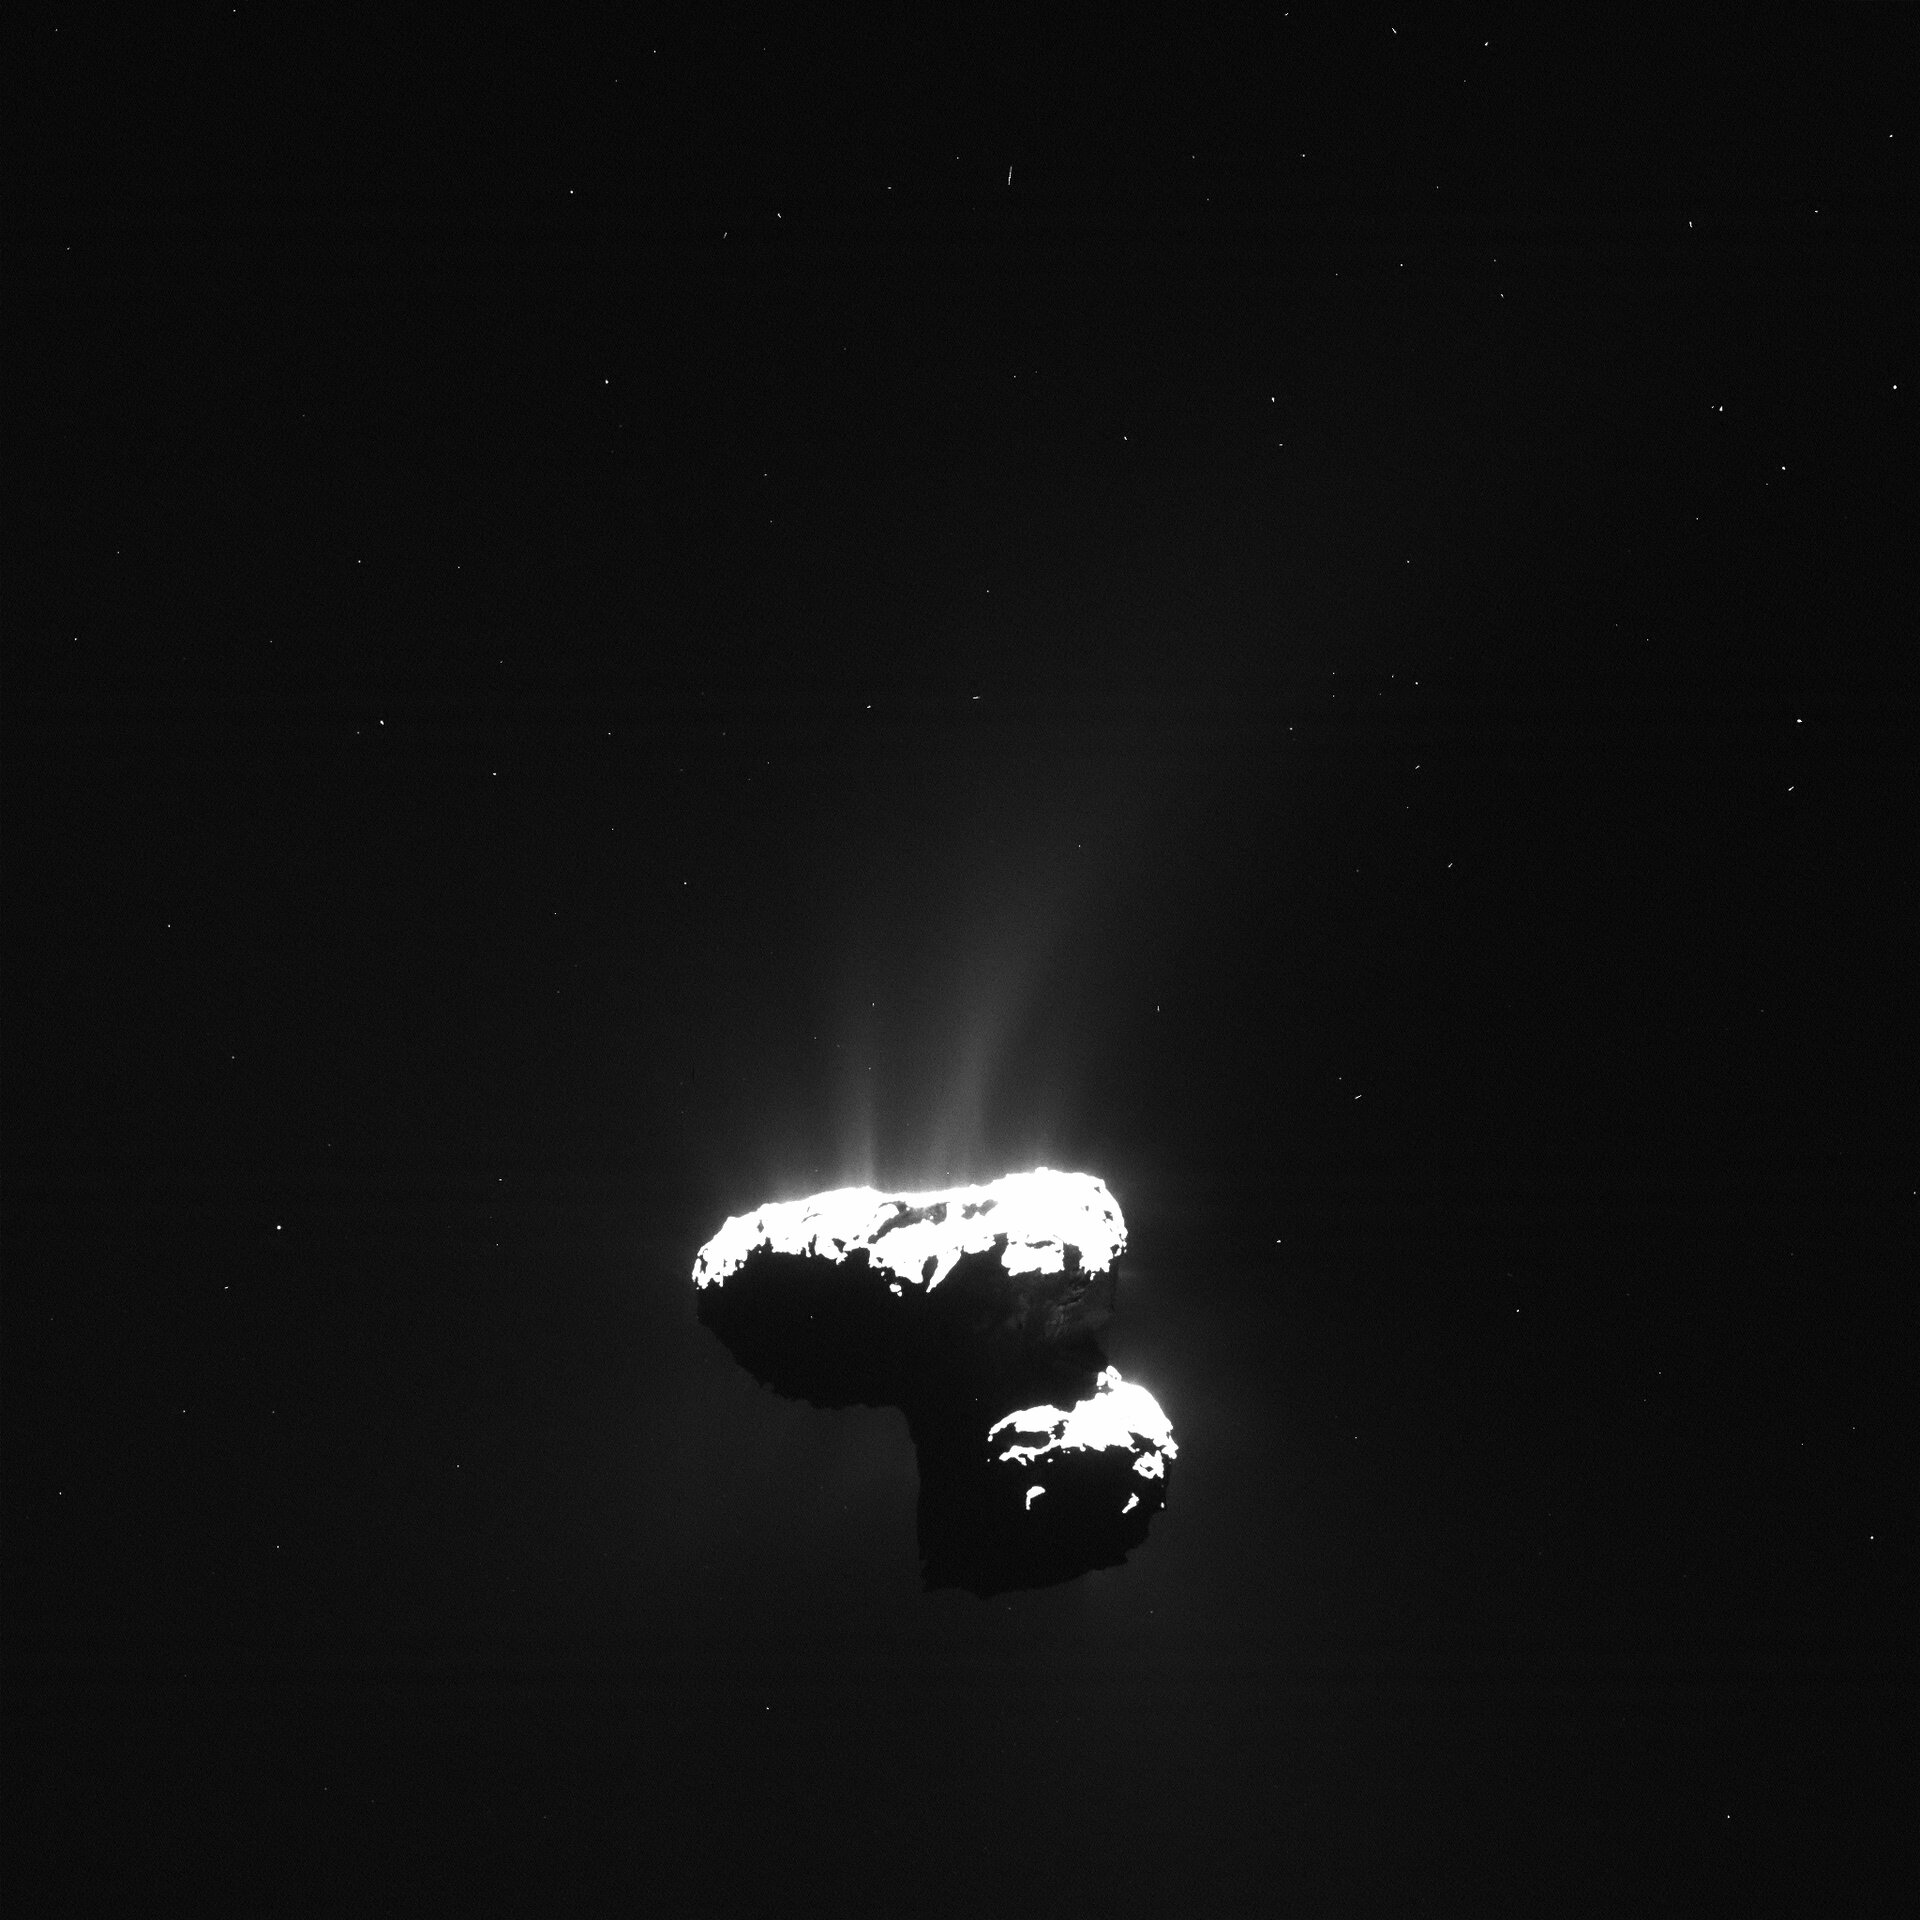 Comet on 13 January 2016 – OSIRIS wide-angle camera